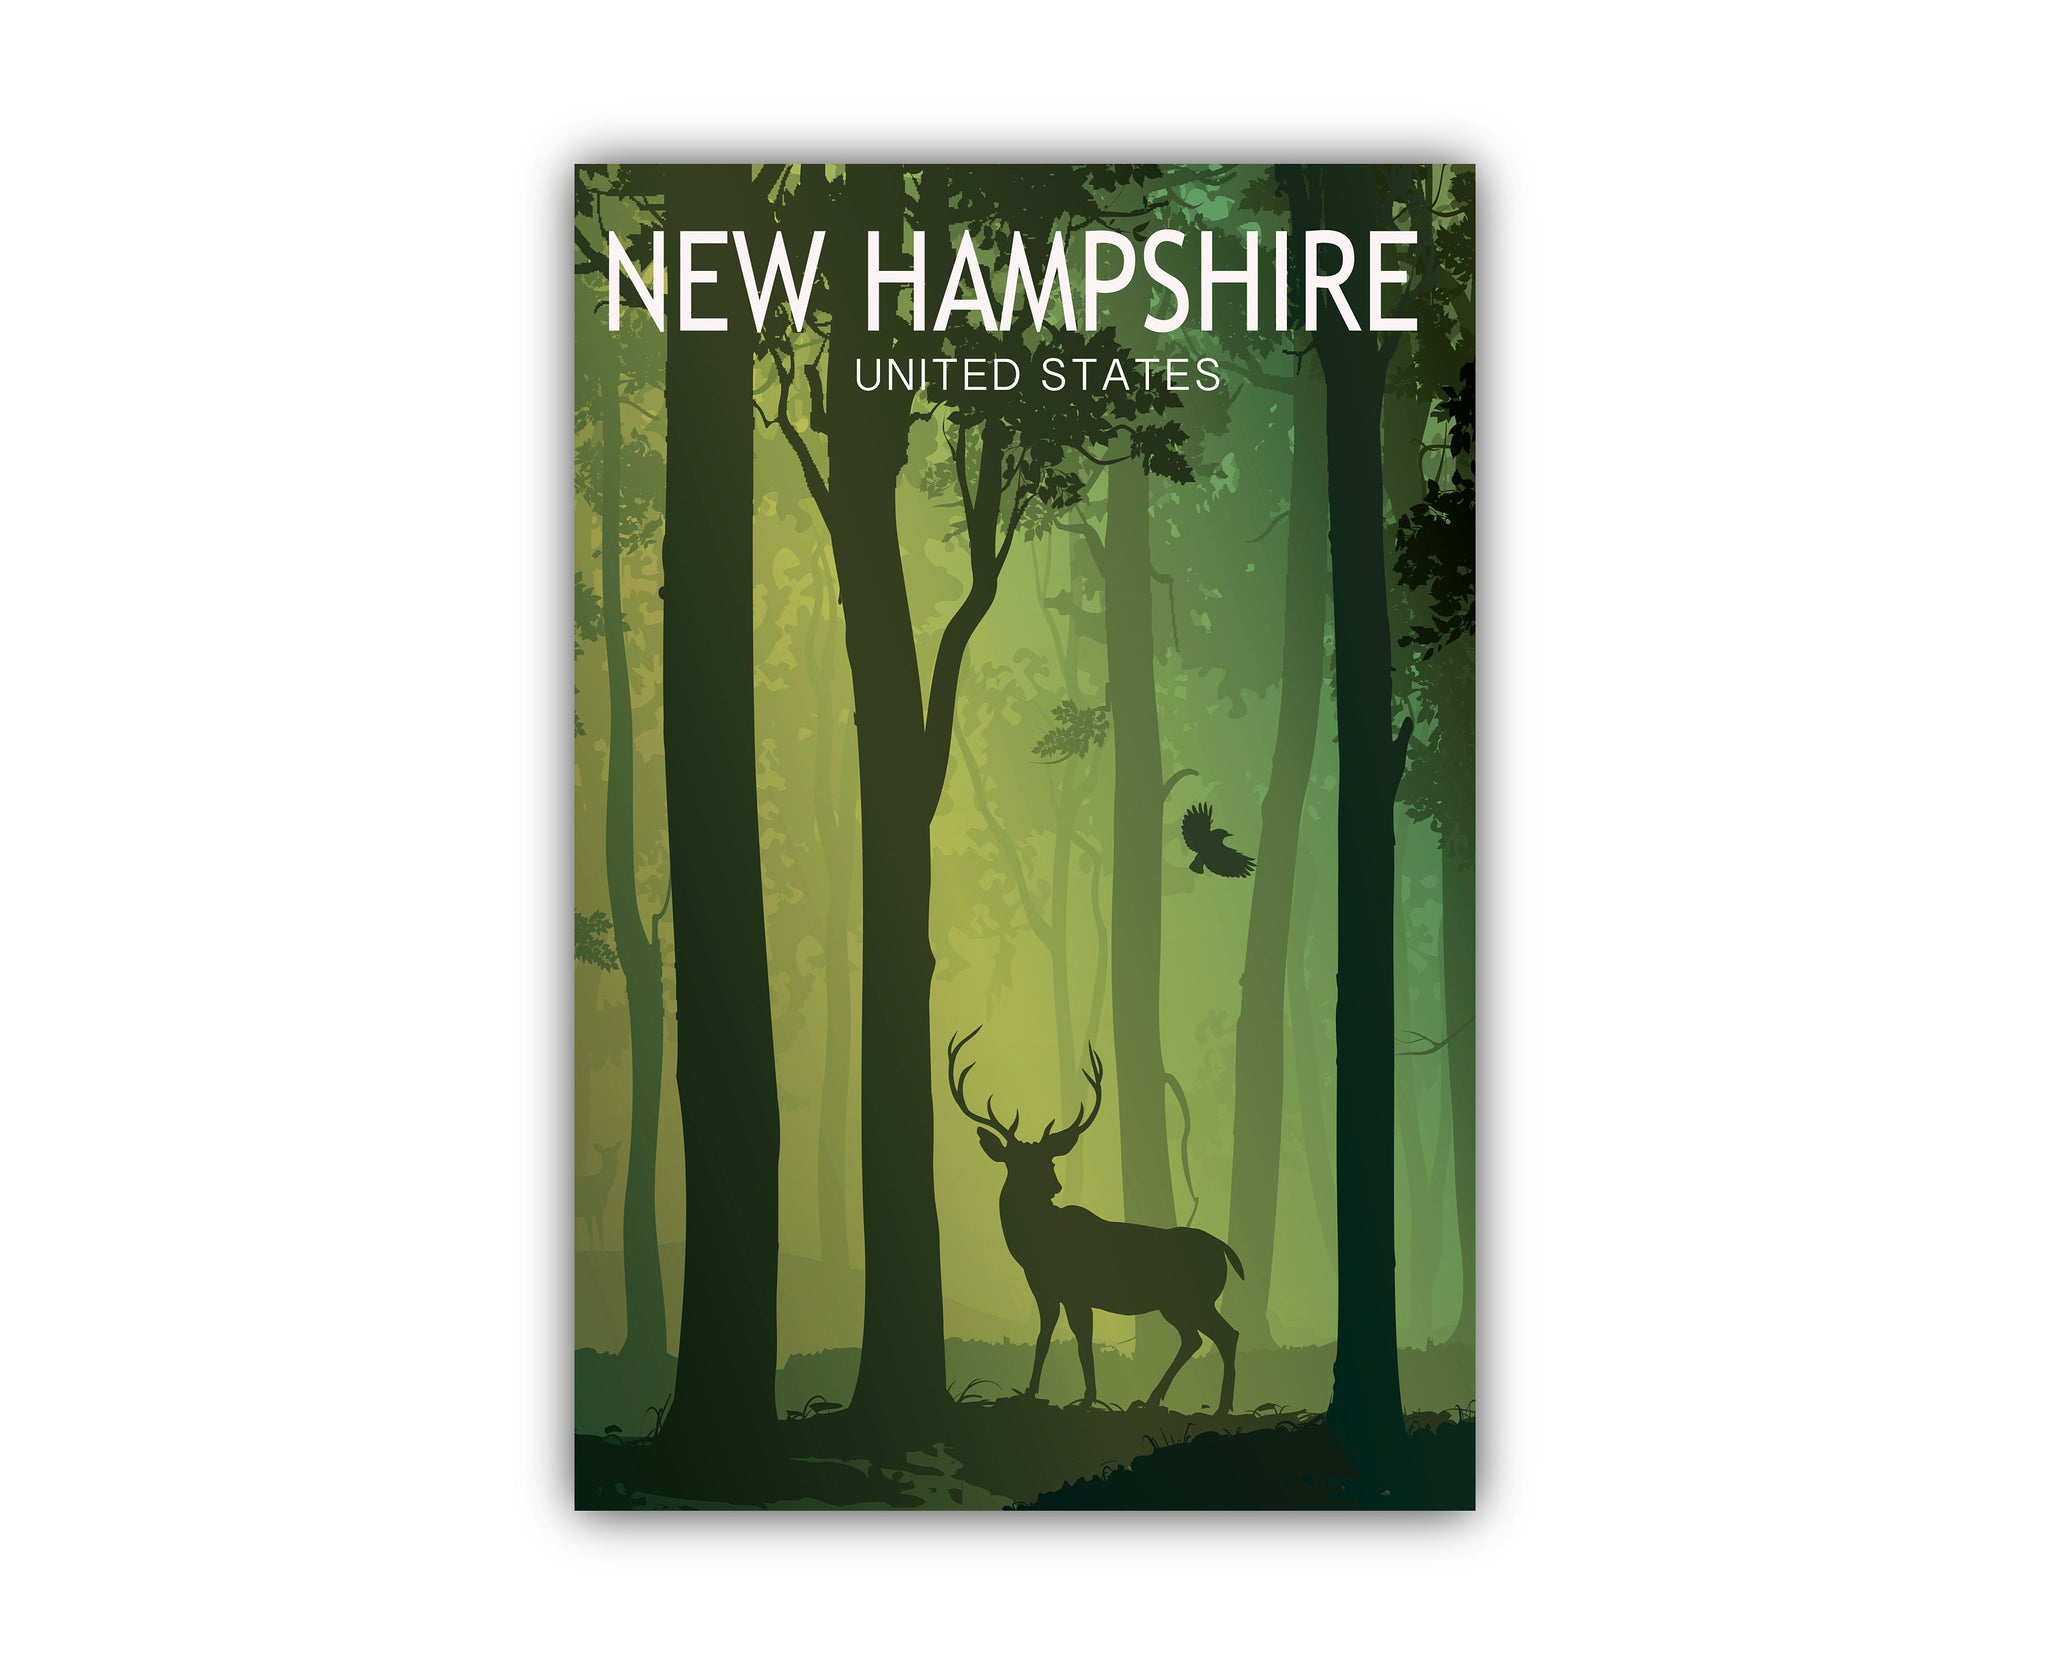 New Hampshire Vintage Rustic Poster Prints